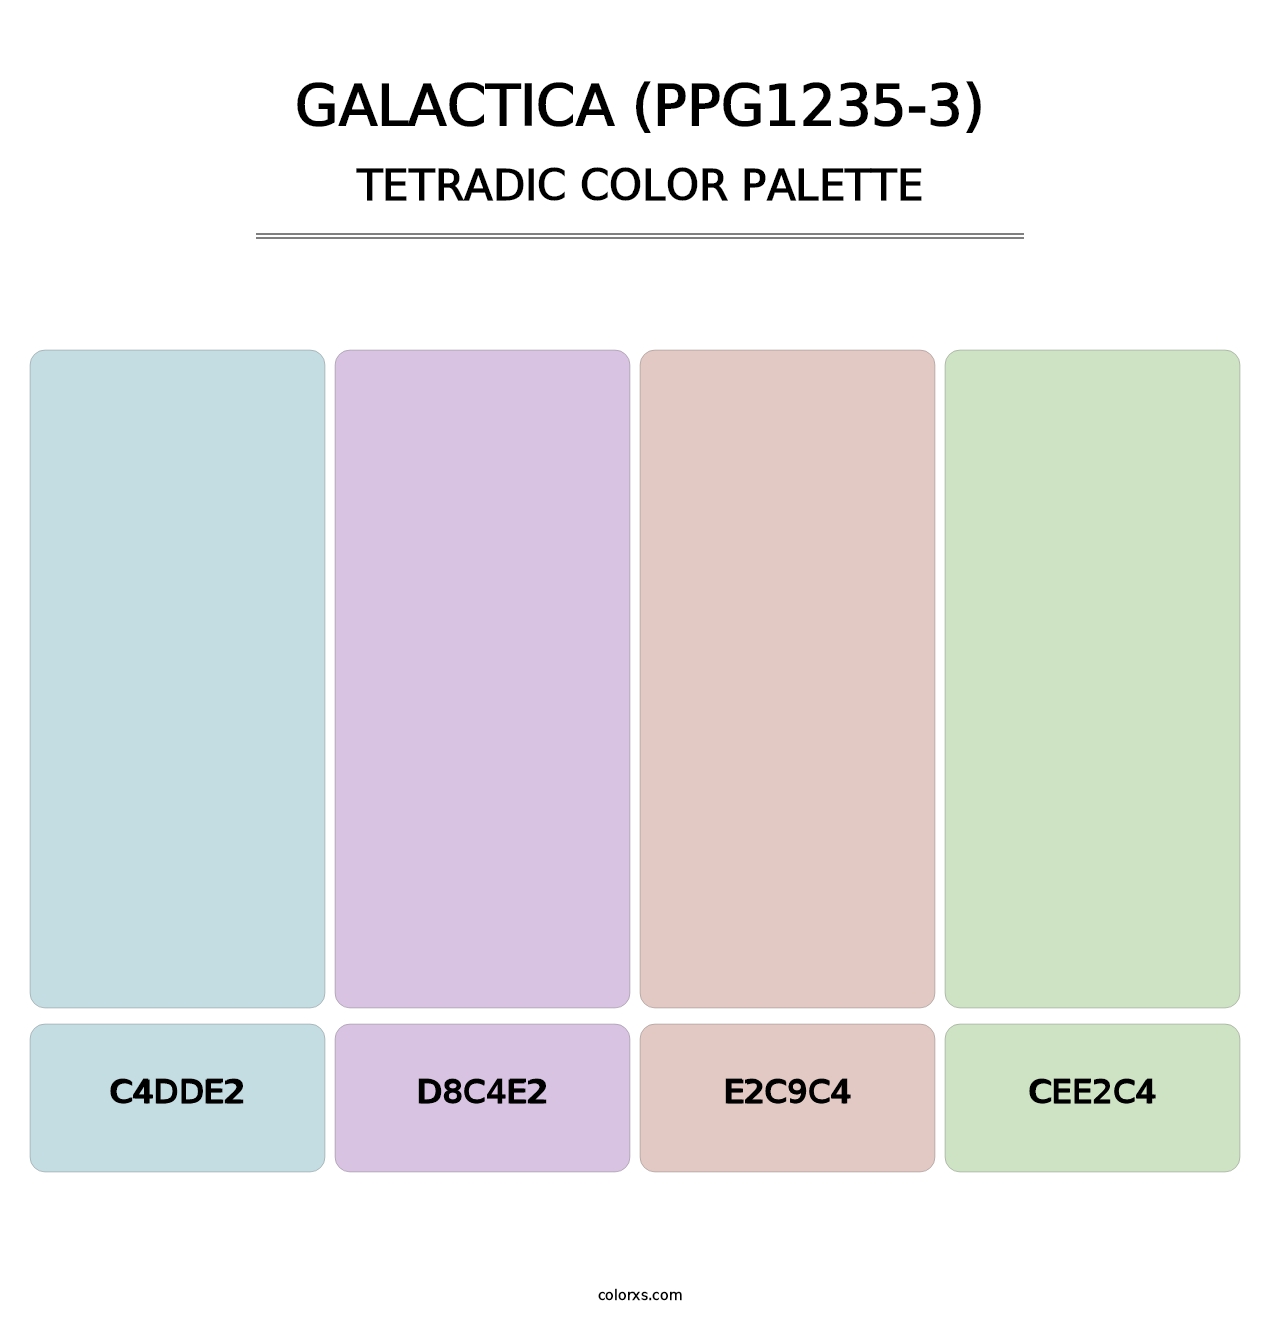 Galactica (PPG1235-3) - Tetradic Color Palette